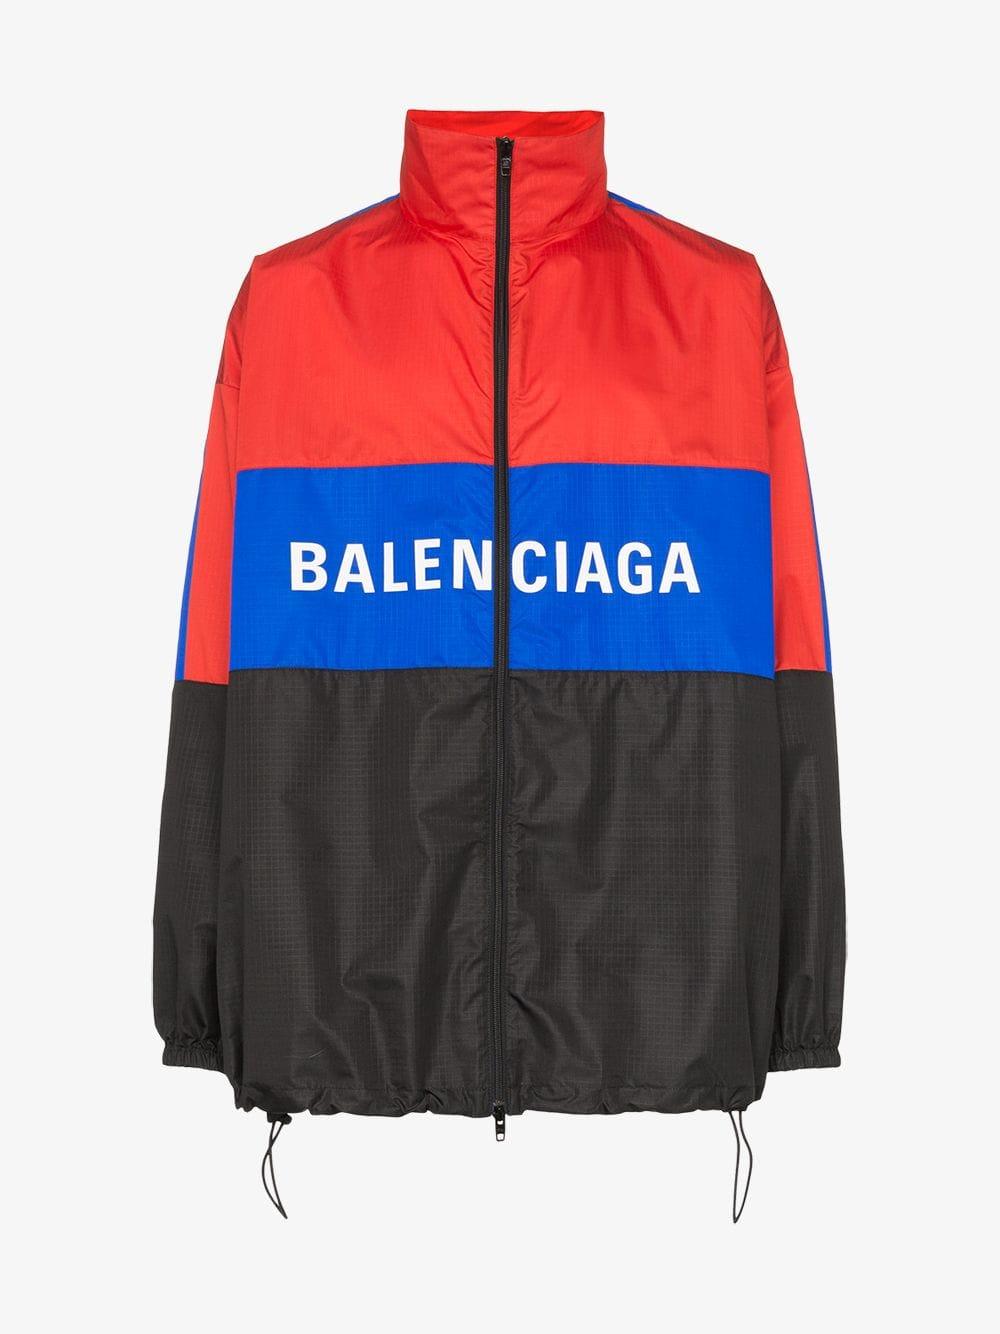 Balenciaga monogram print track jacket